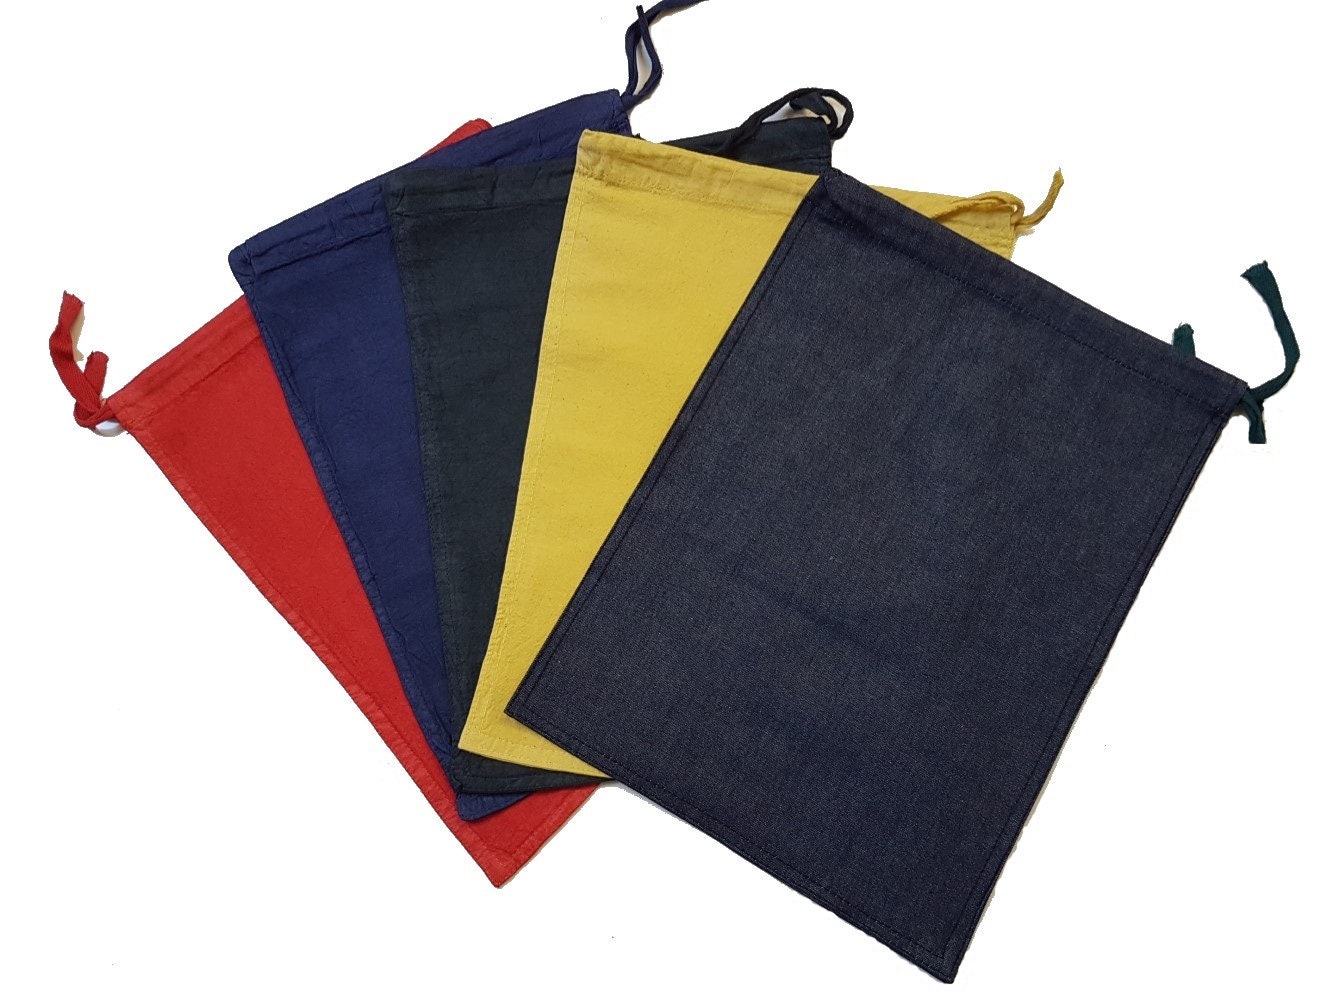 20pcs 8''x6''x3'' Kraft Paper Bags / Paper Gift Bags / Favor Bags / Wedding  Gift Bags / Colored Paper Bags / 